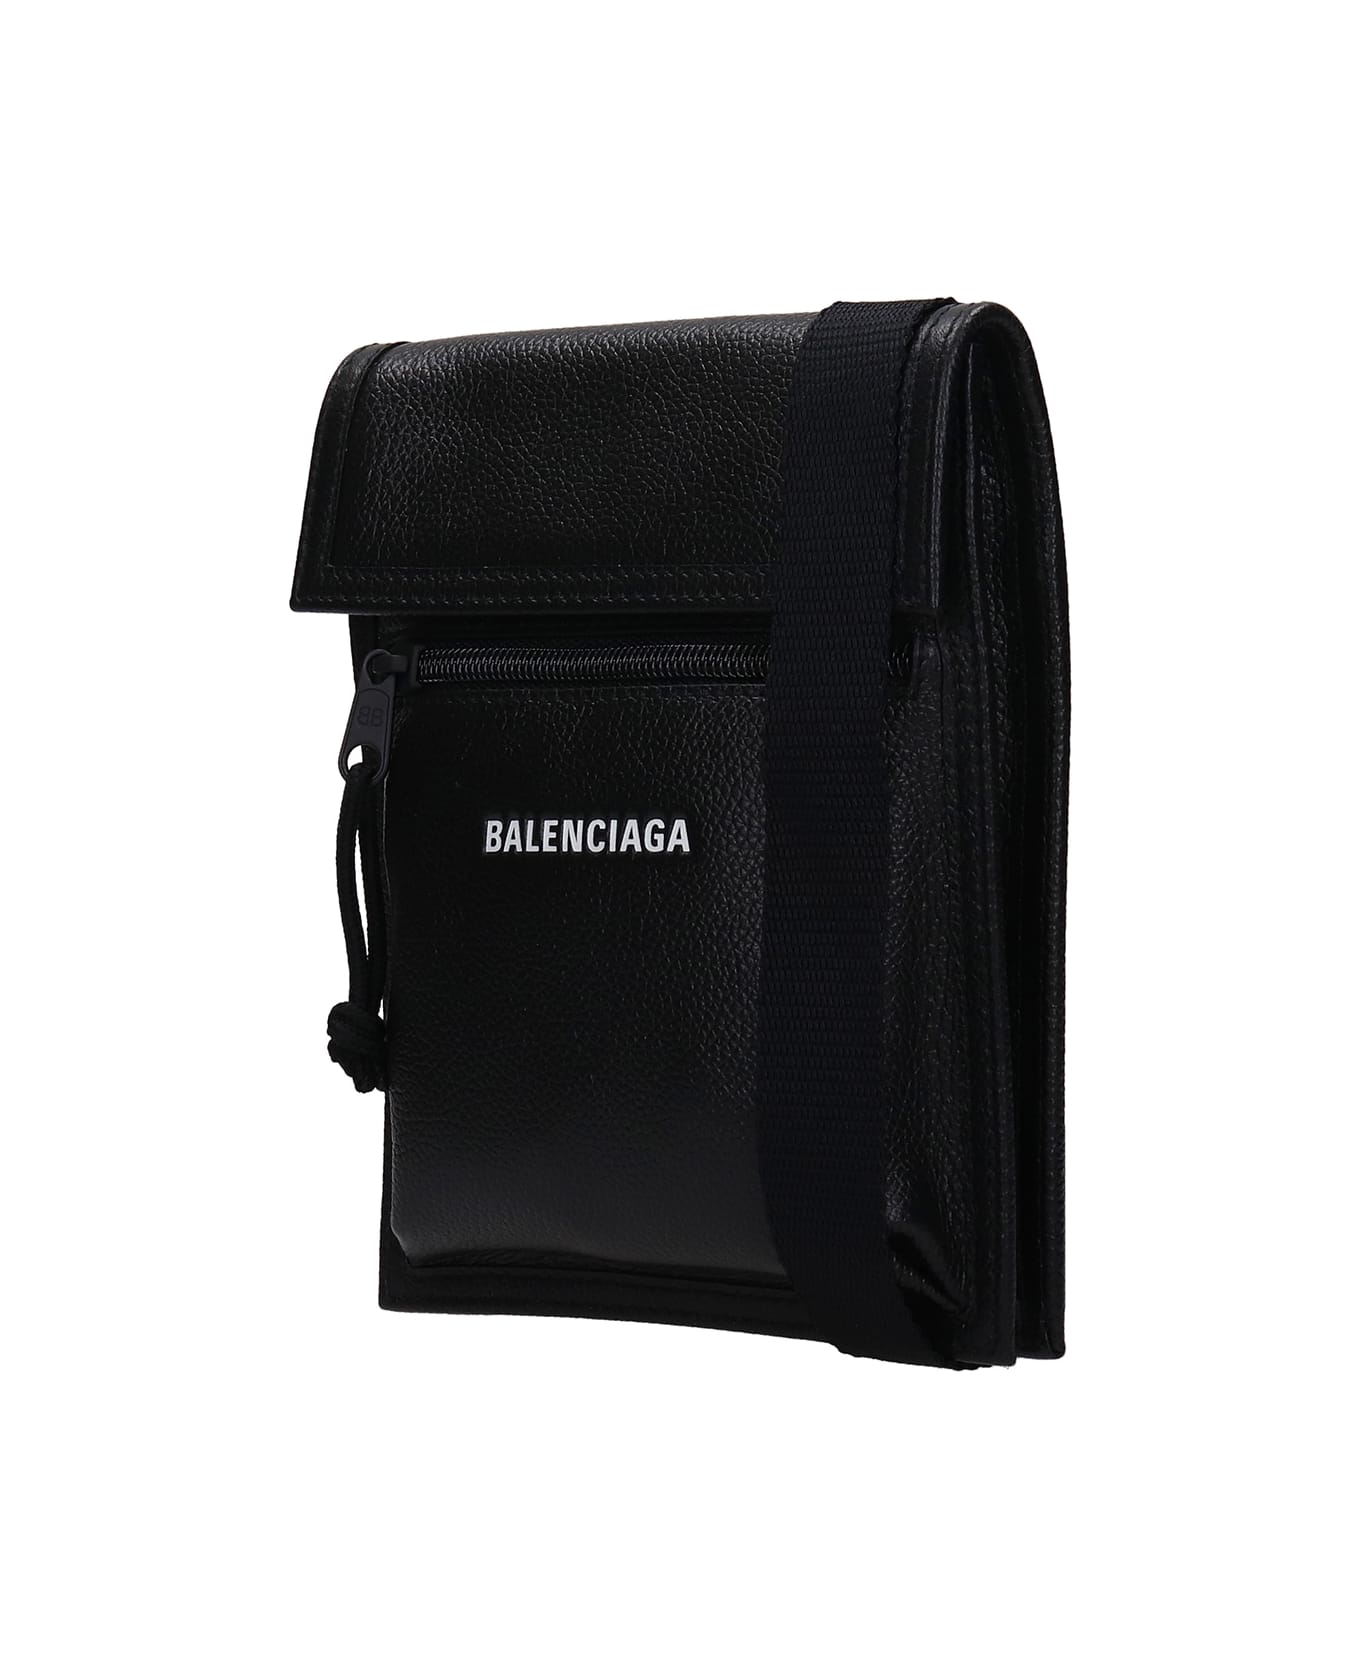 Balenciaga Waist Bag In Black Leather - black